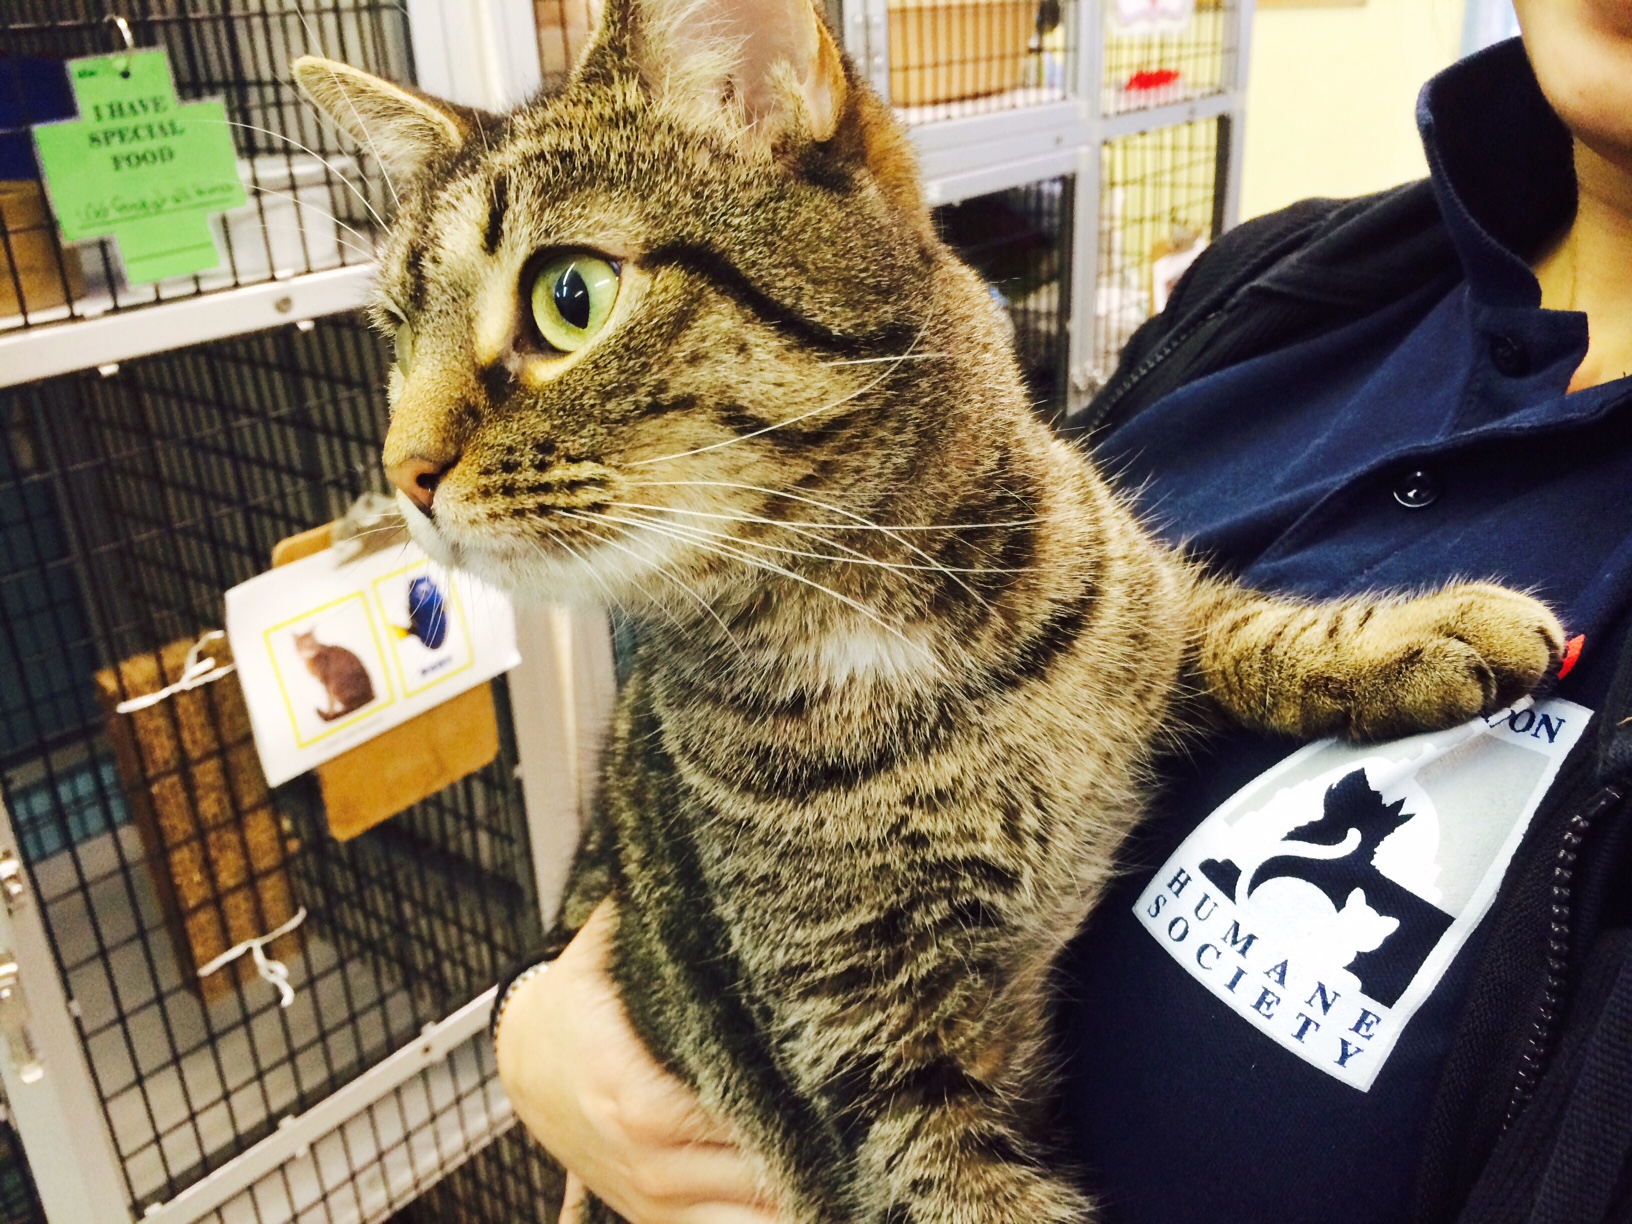 Dori is available for adoption at the Washington Humane Society. (WTOP/Kate Ryan)